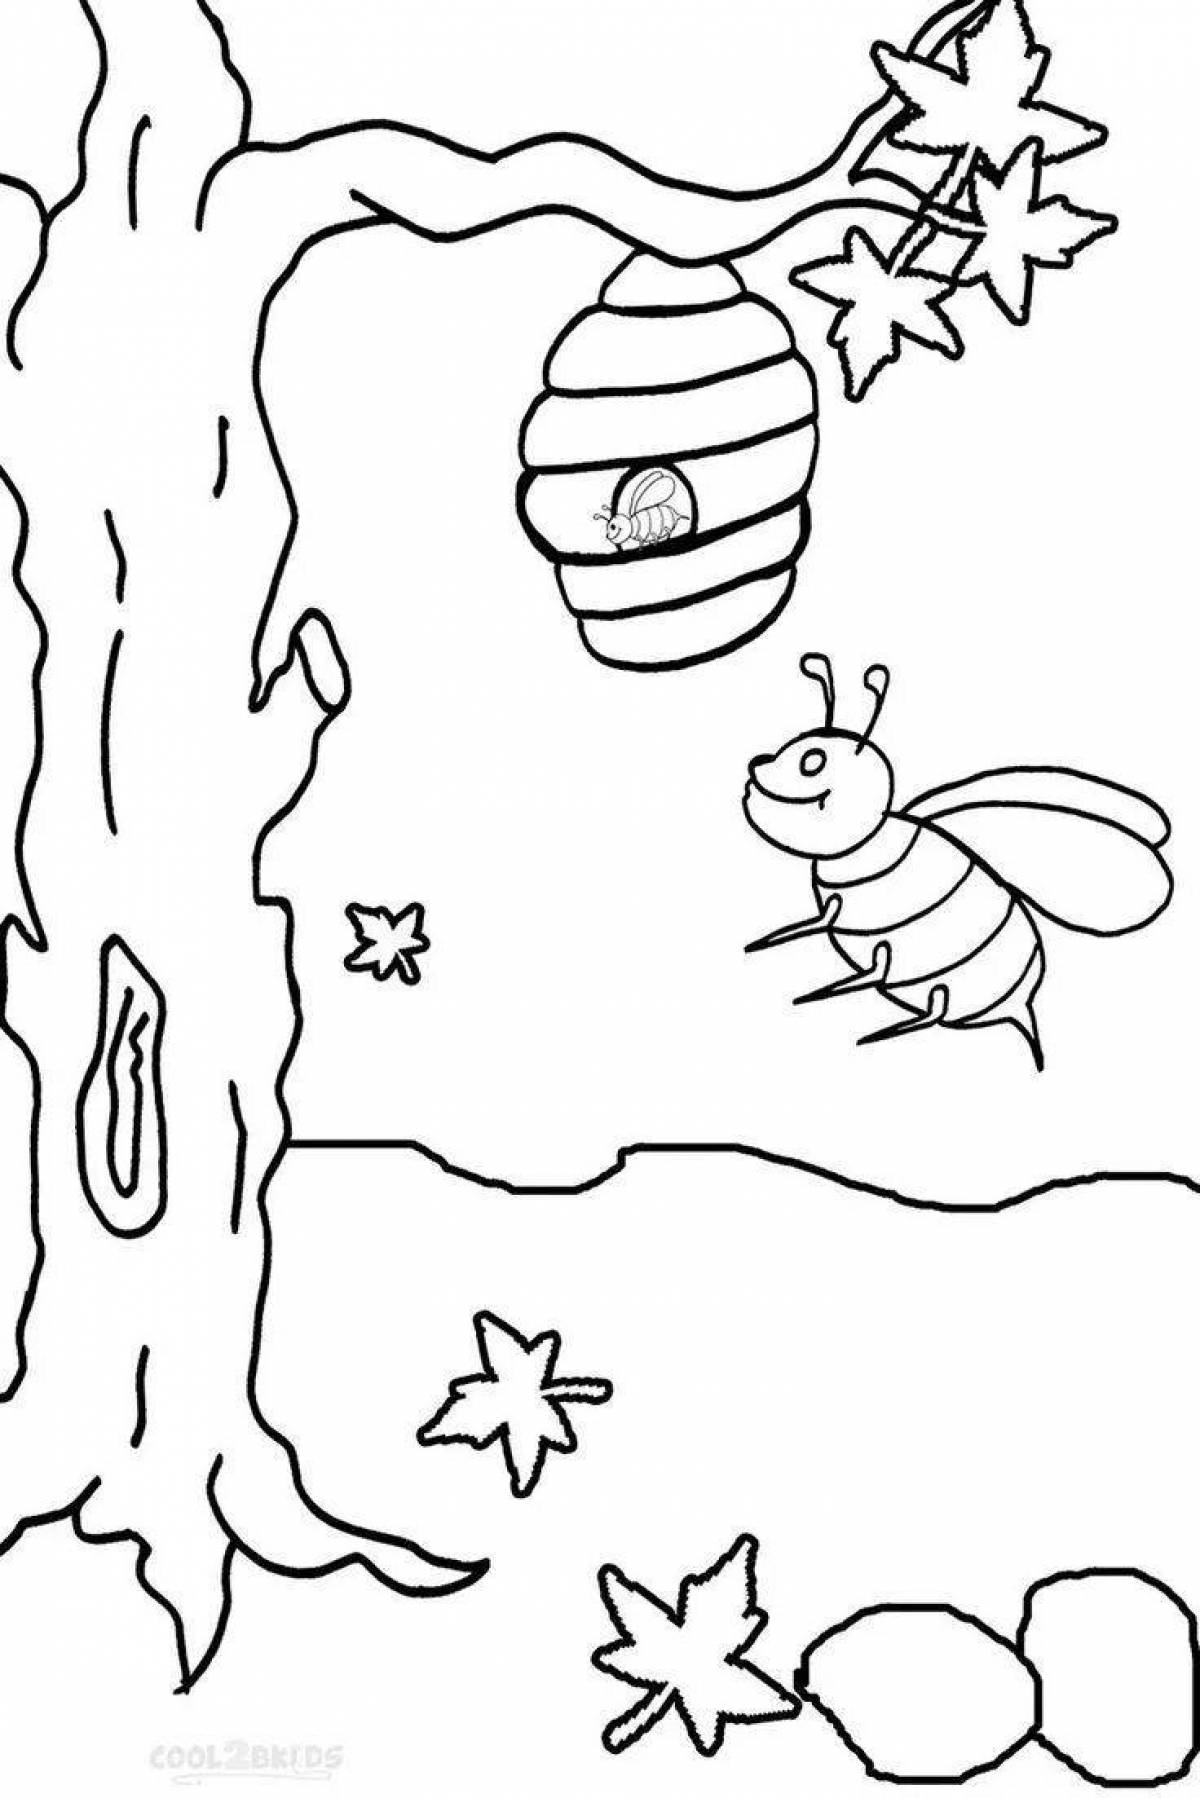 Идеи на тему «Ульи» (27) | пчелиная тематика, пчеловодство, рисунки пчел